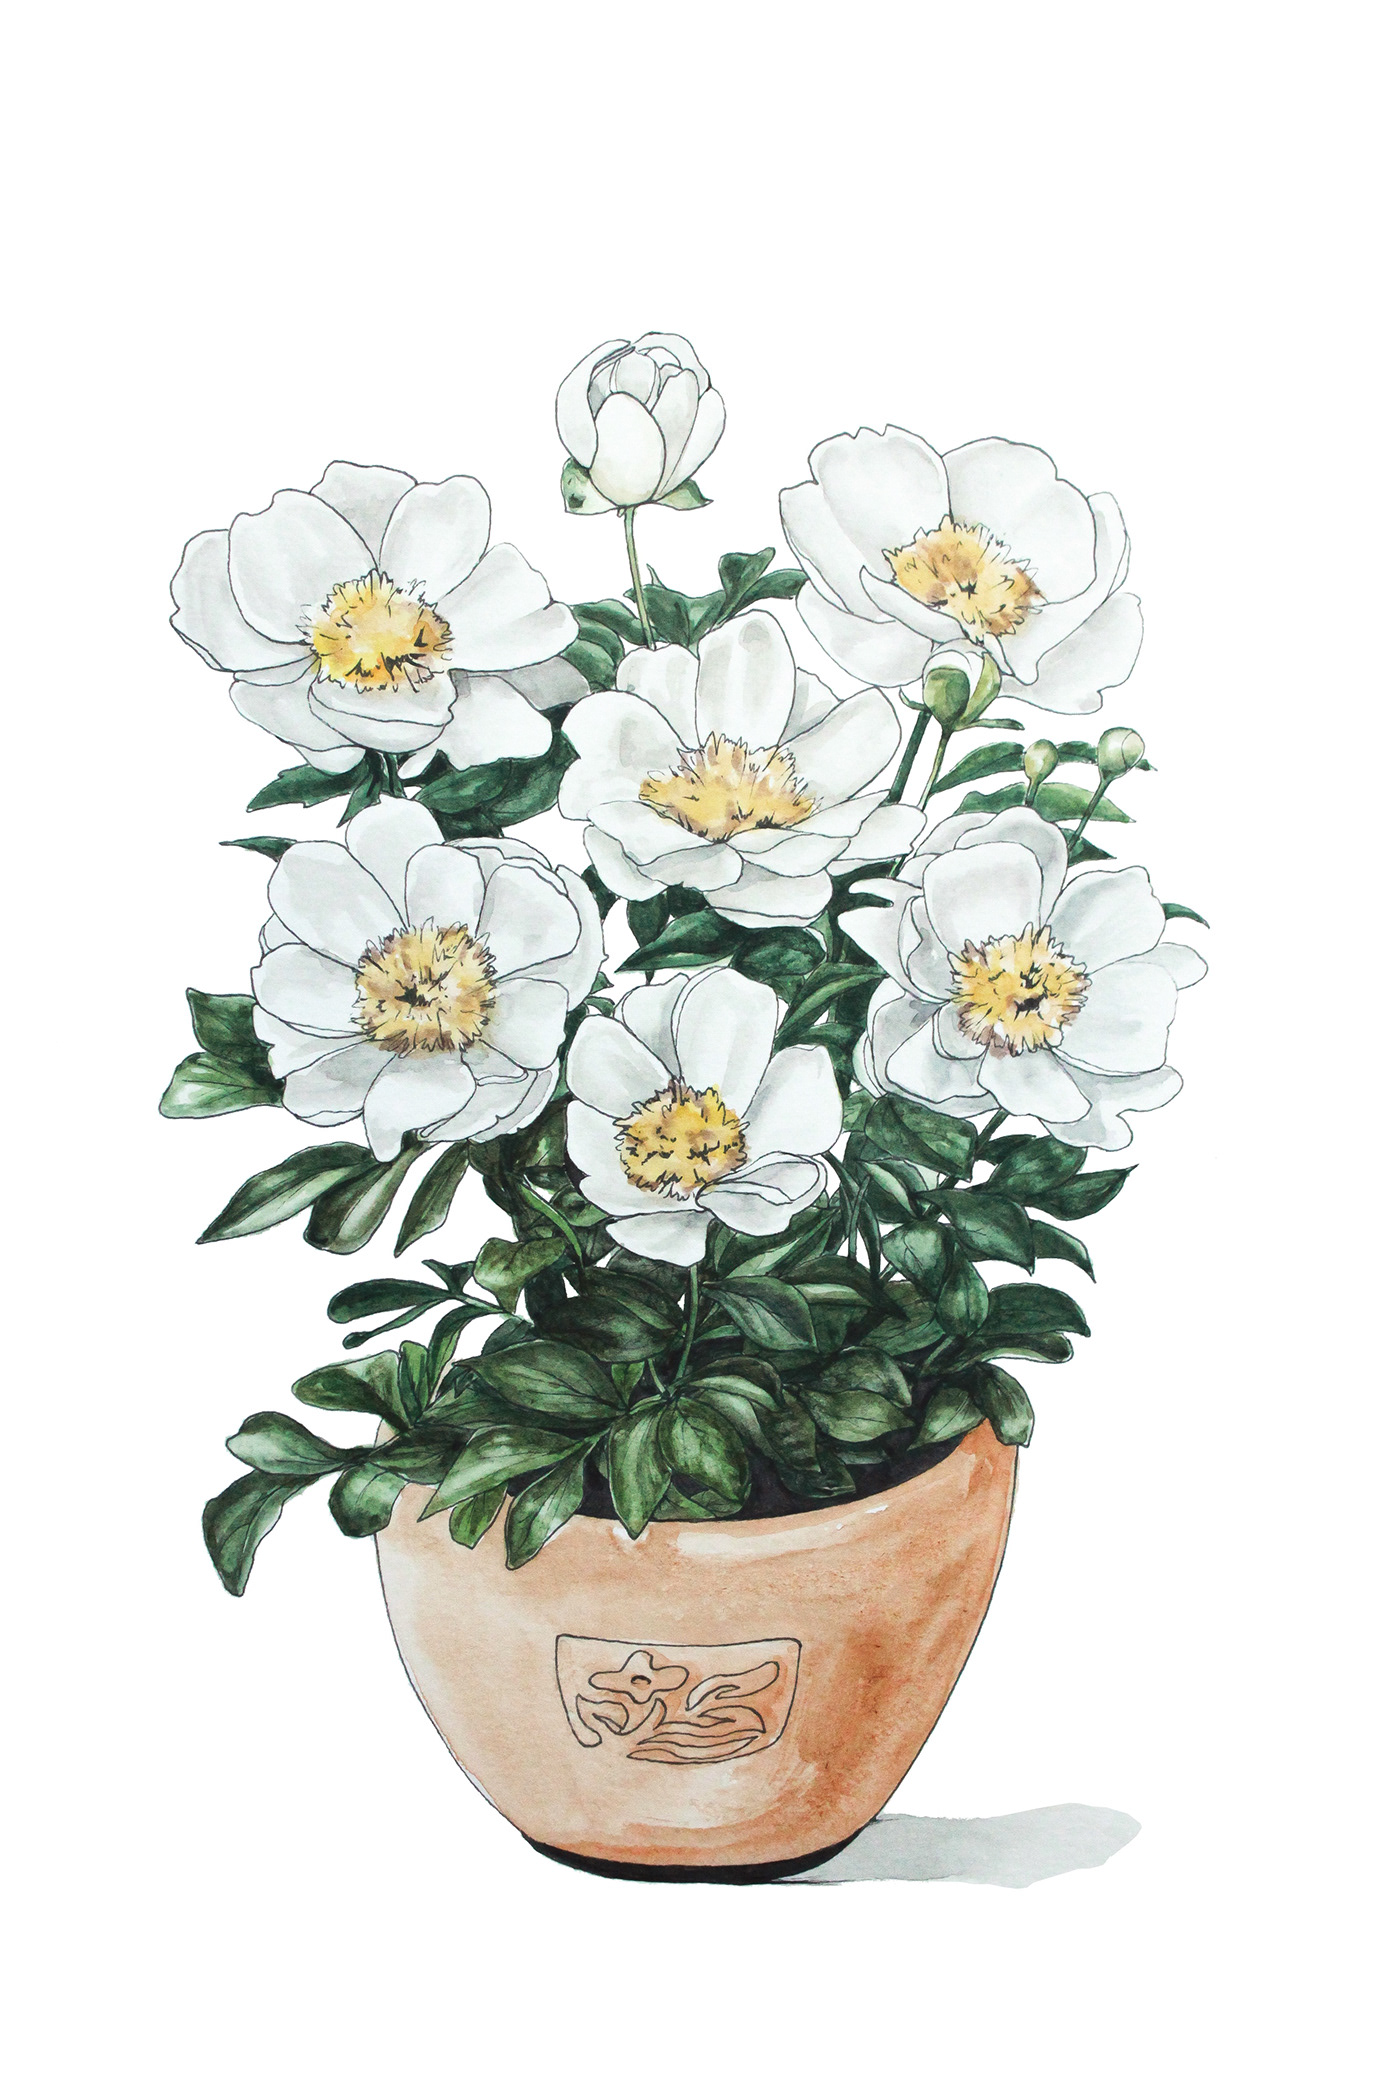 ILLUSTRATION  Drawing  painting   plants Flowers botanical